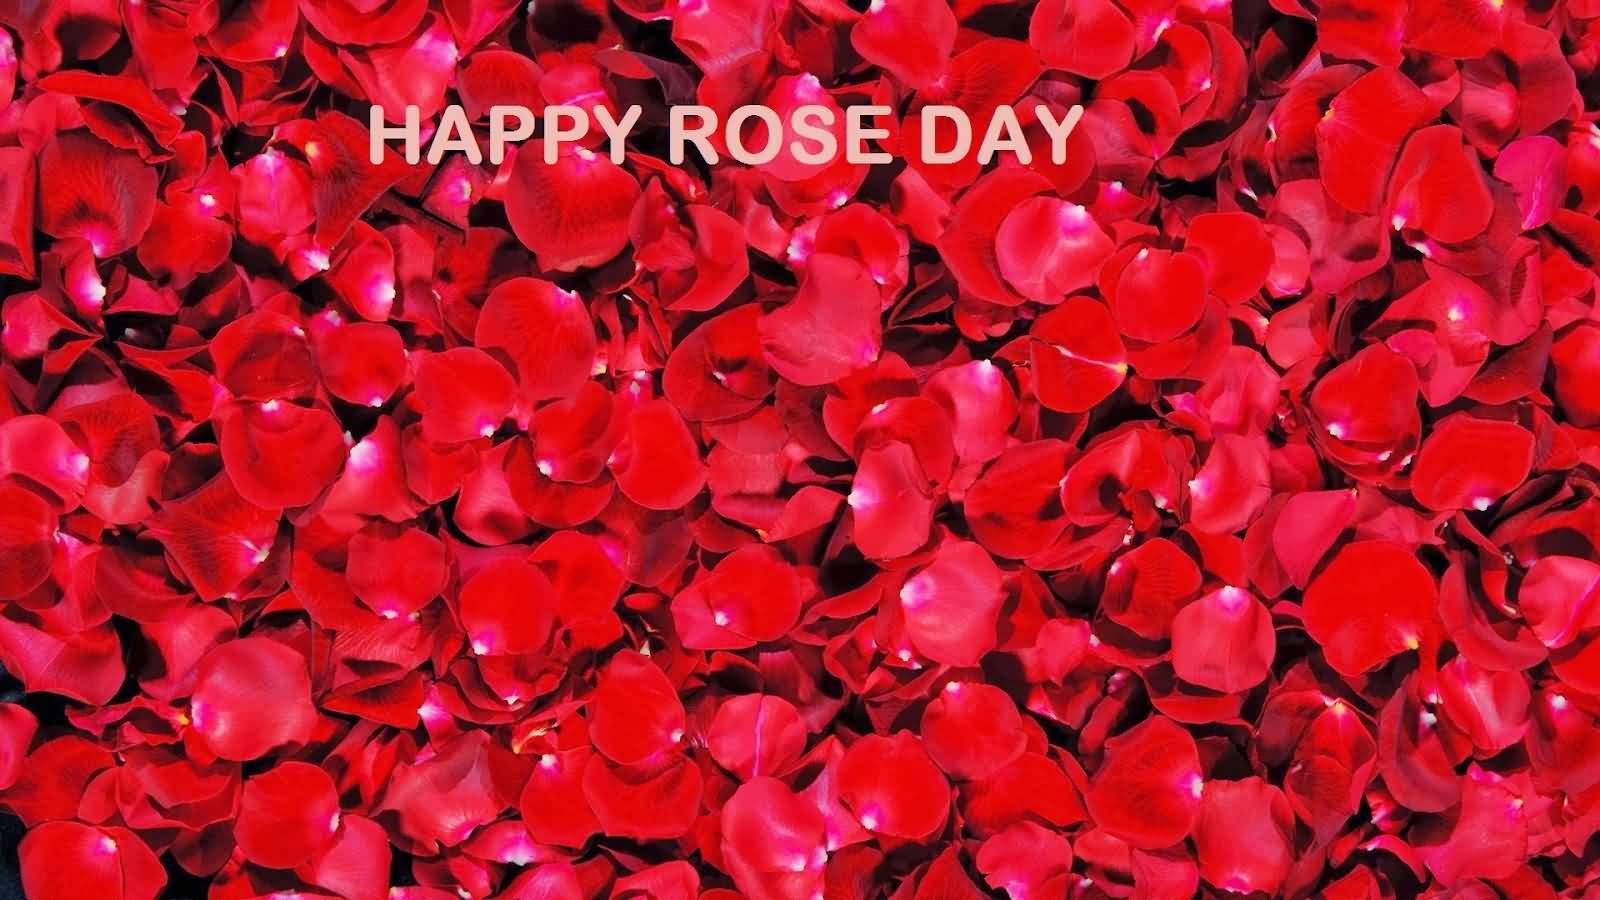 Happy Rose Day Rose Petals